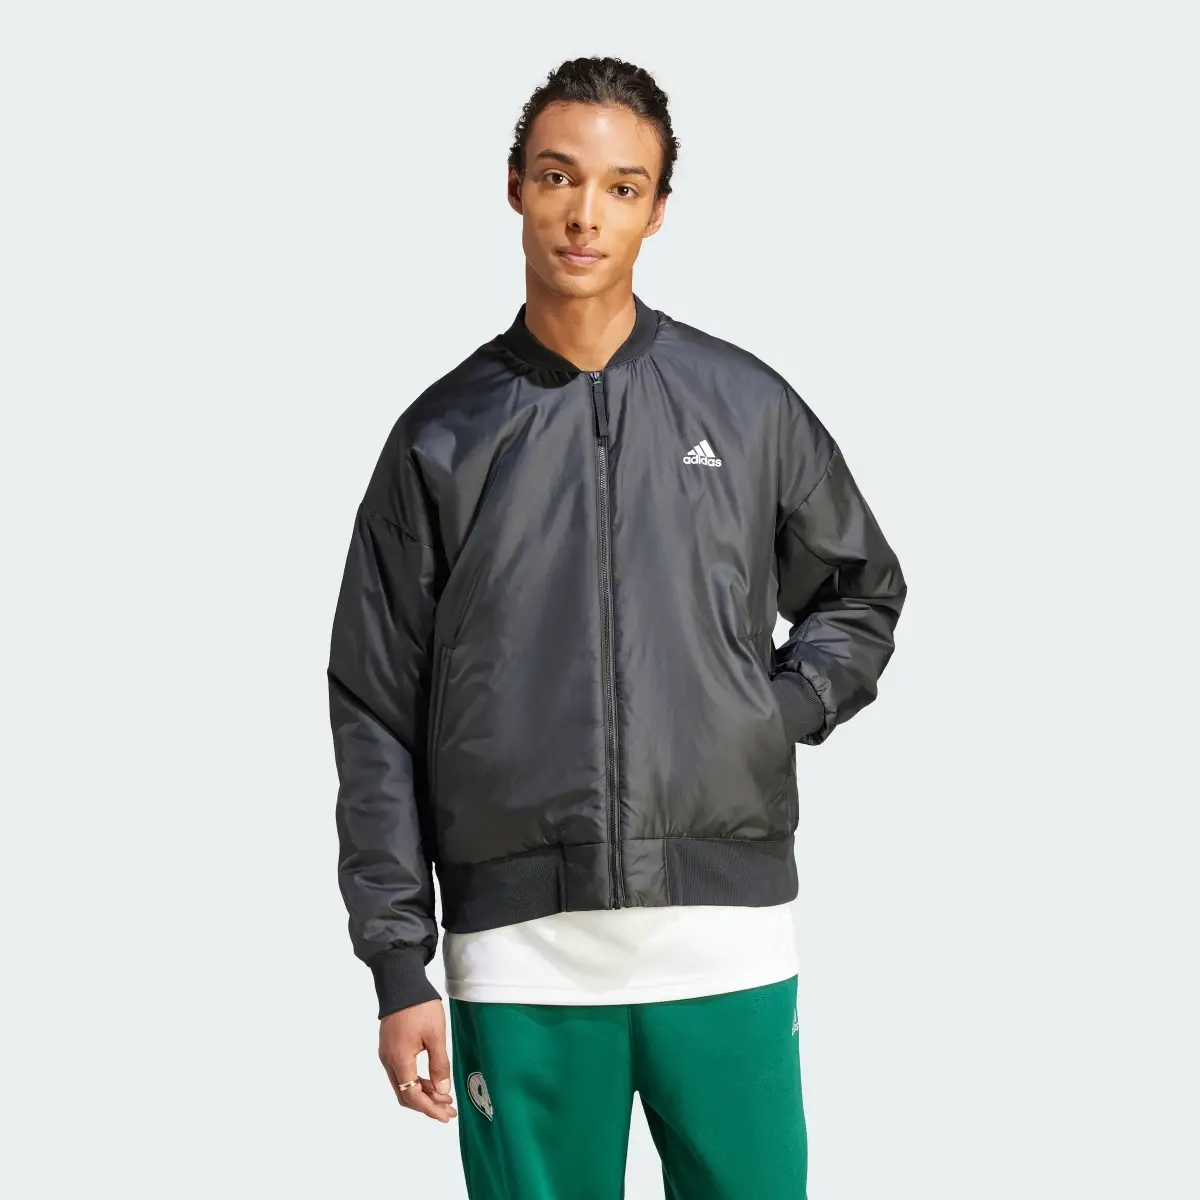 Adidas Brand Love Bomber Jacket. 2